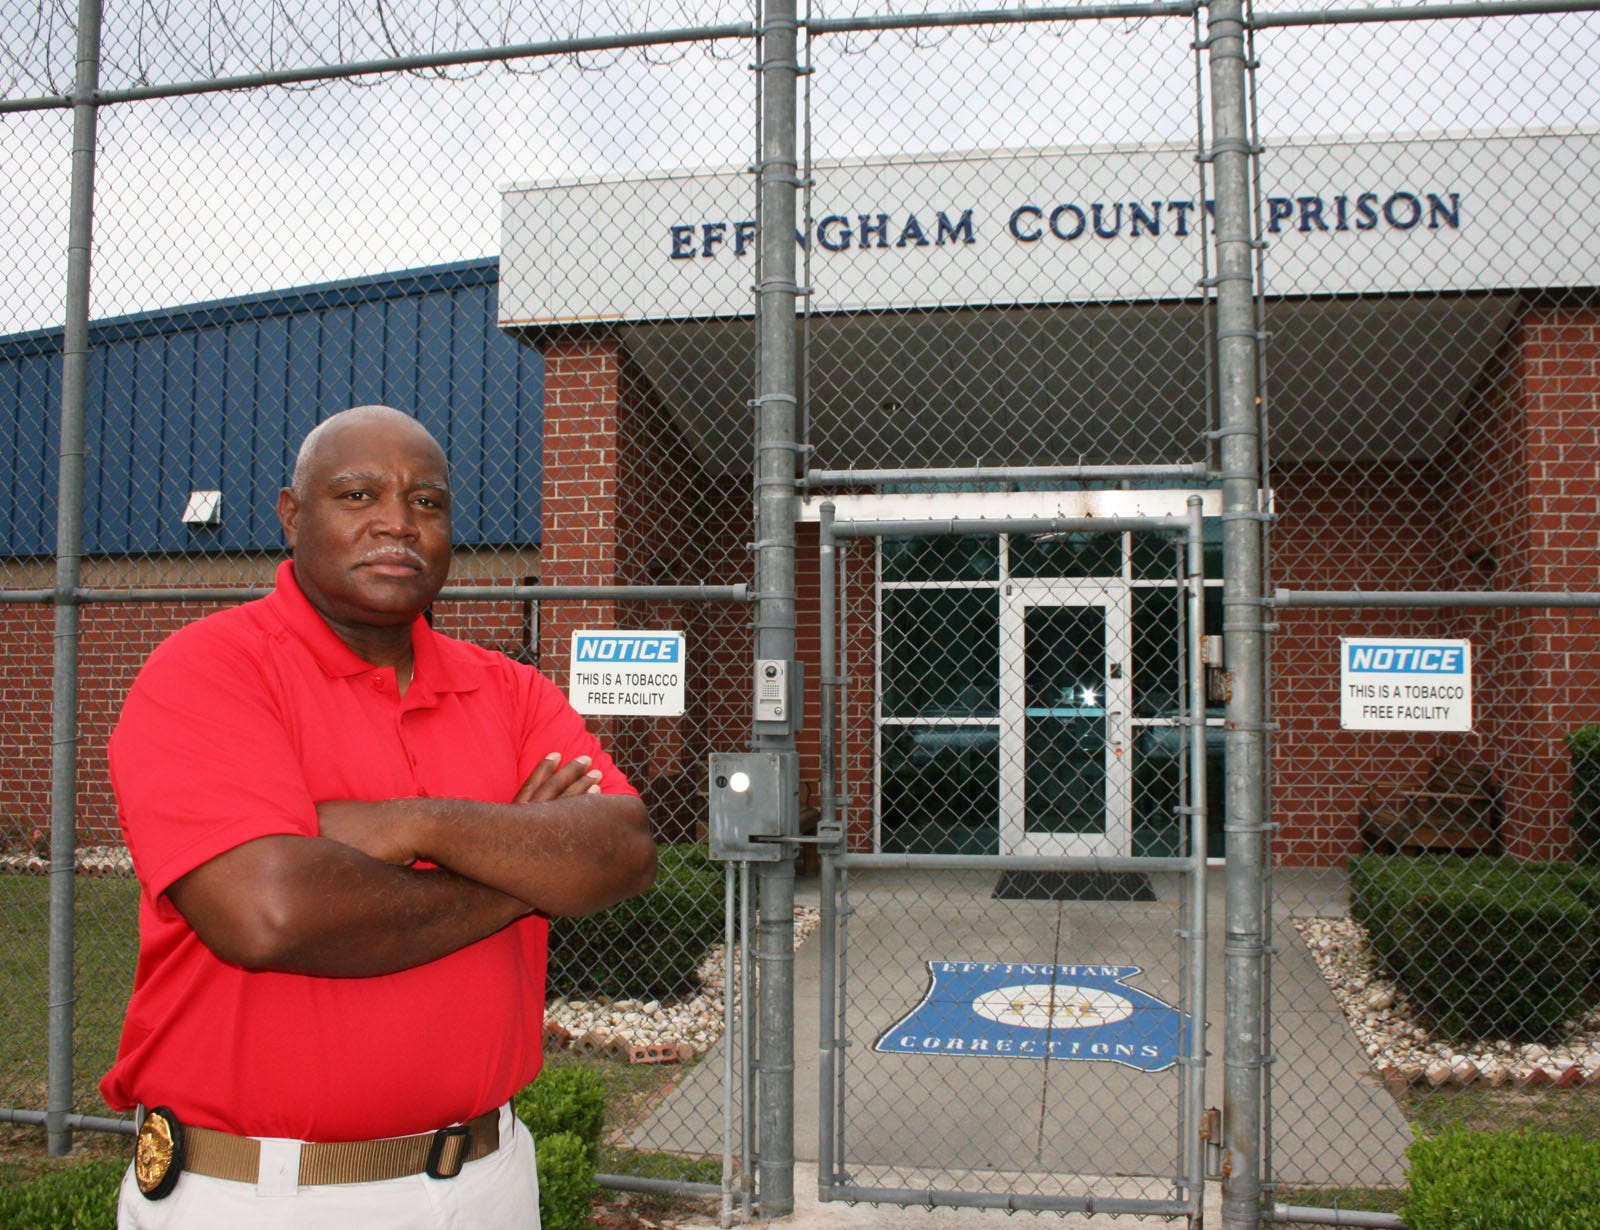 effingham county prison